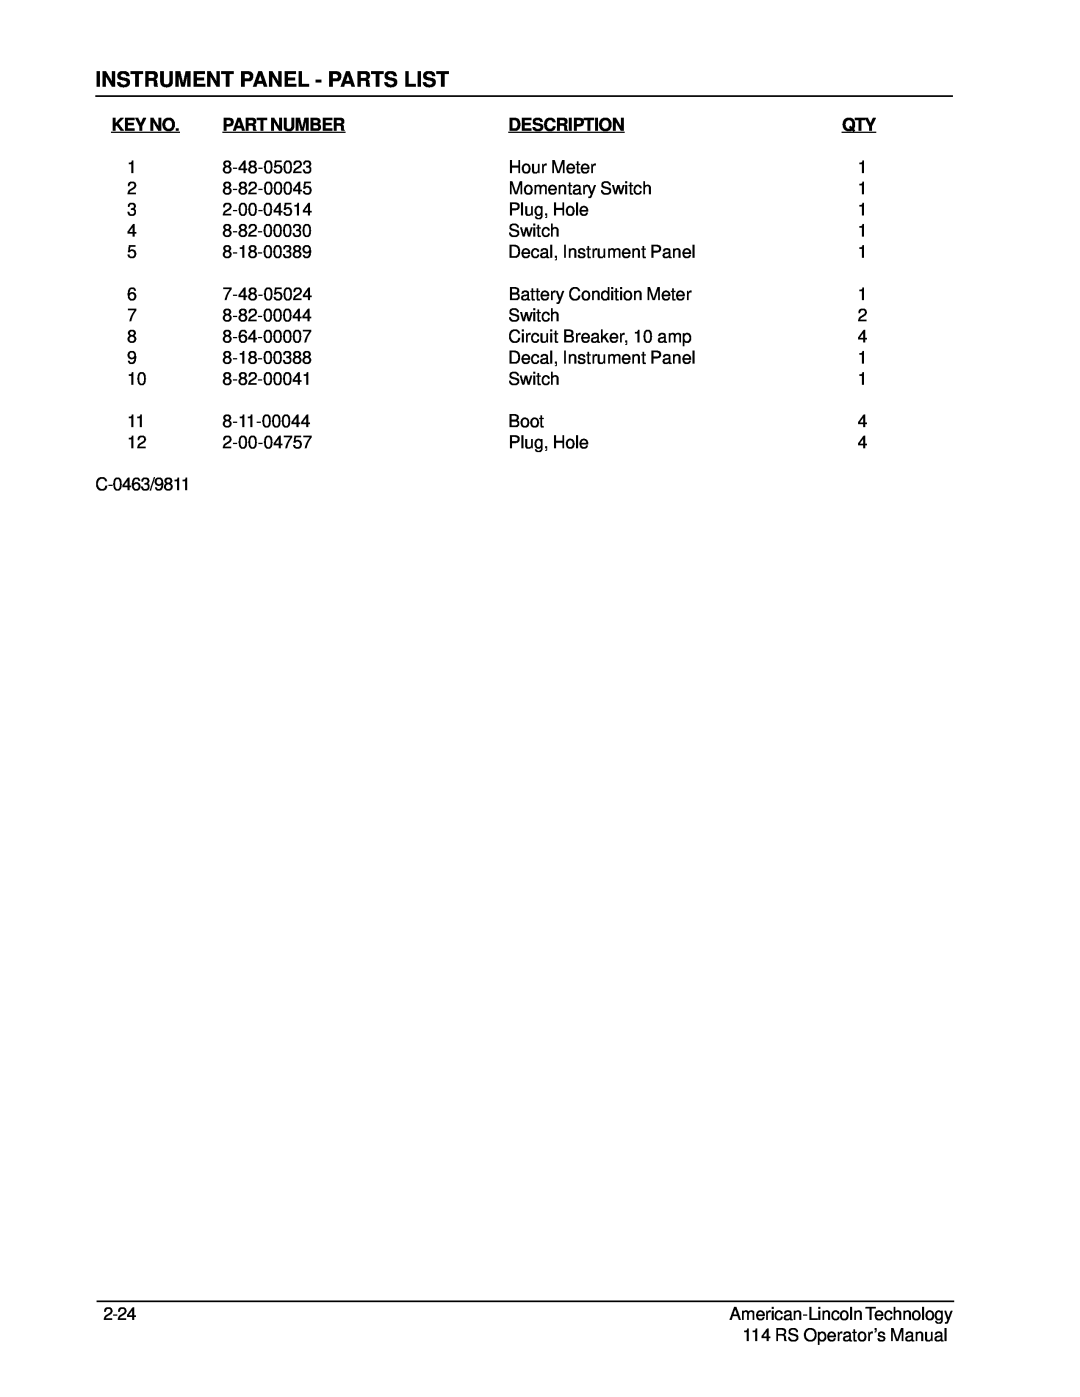 Nilfisk-ALTO 114RS SWEEPER manual Instrument Panel - Parts List, Part Number, Description 